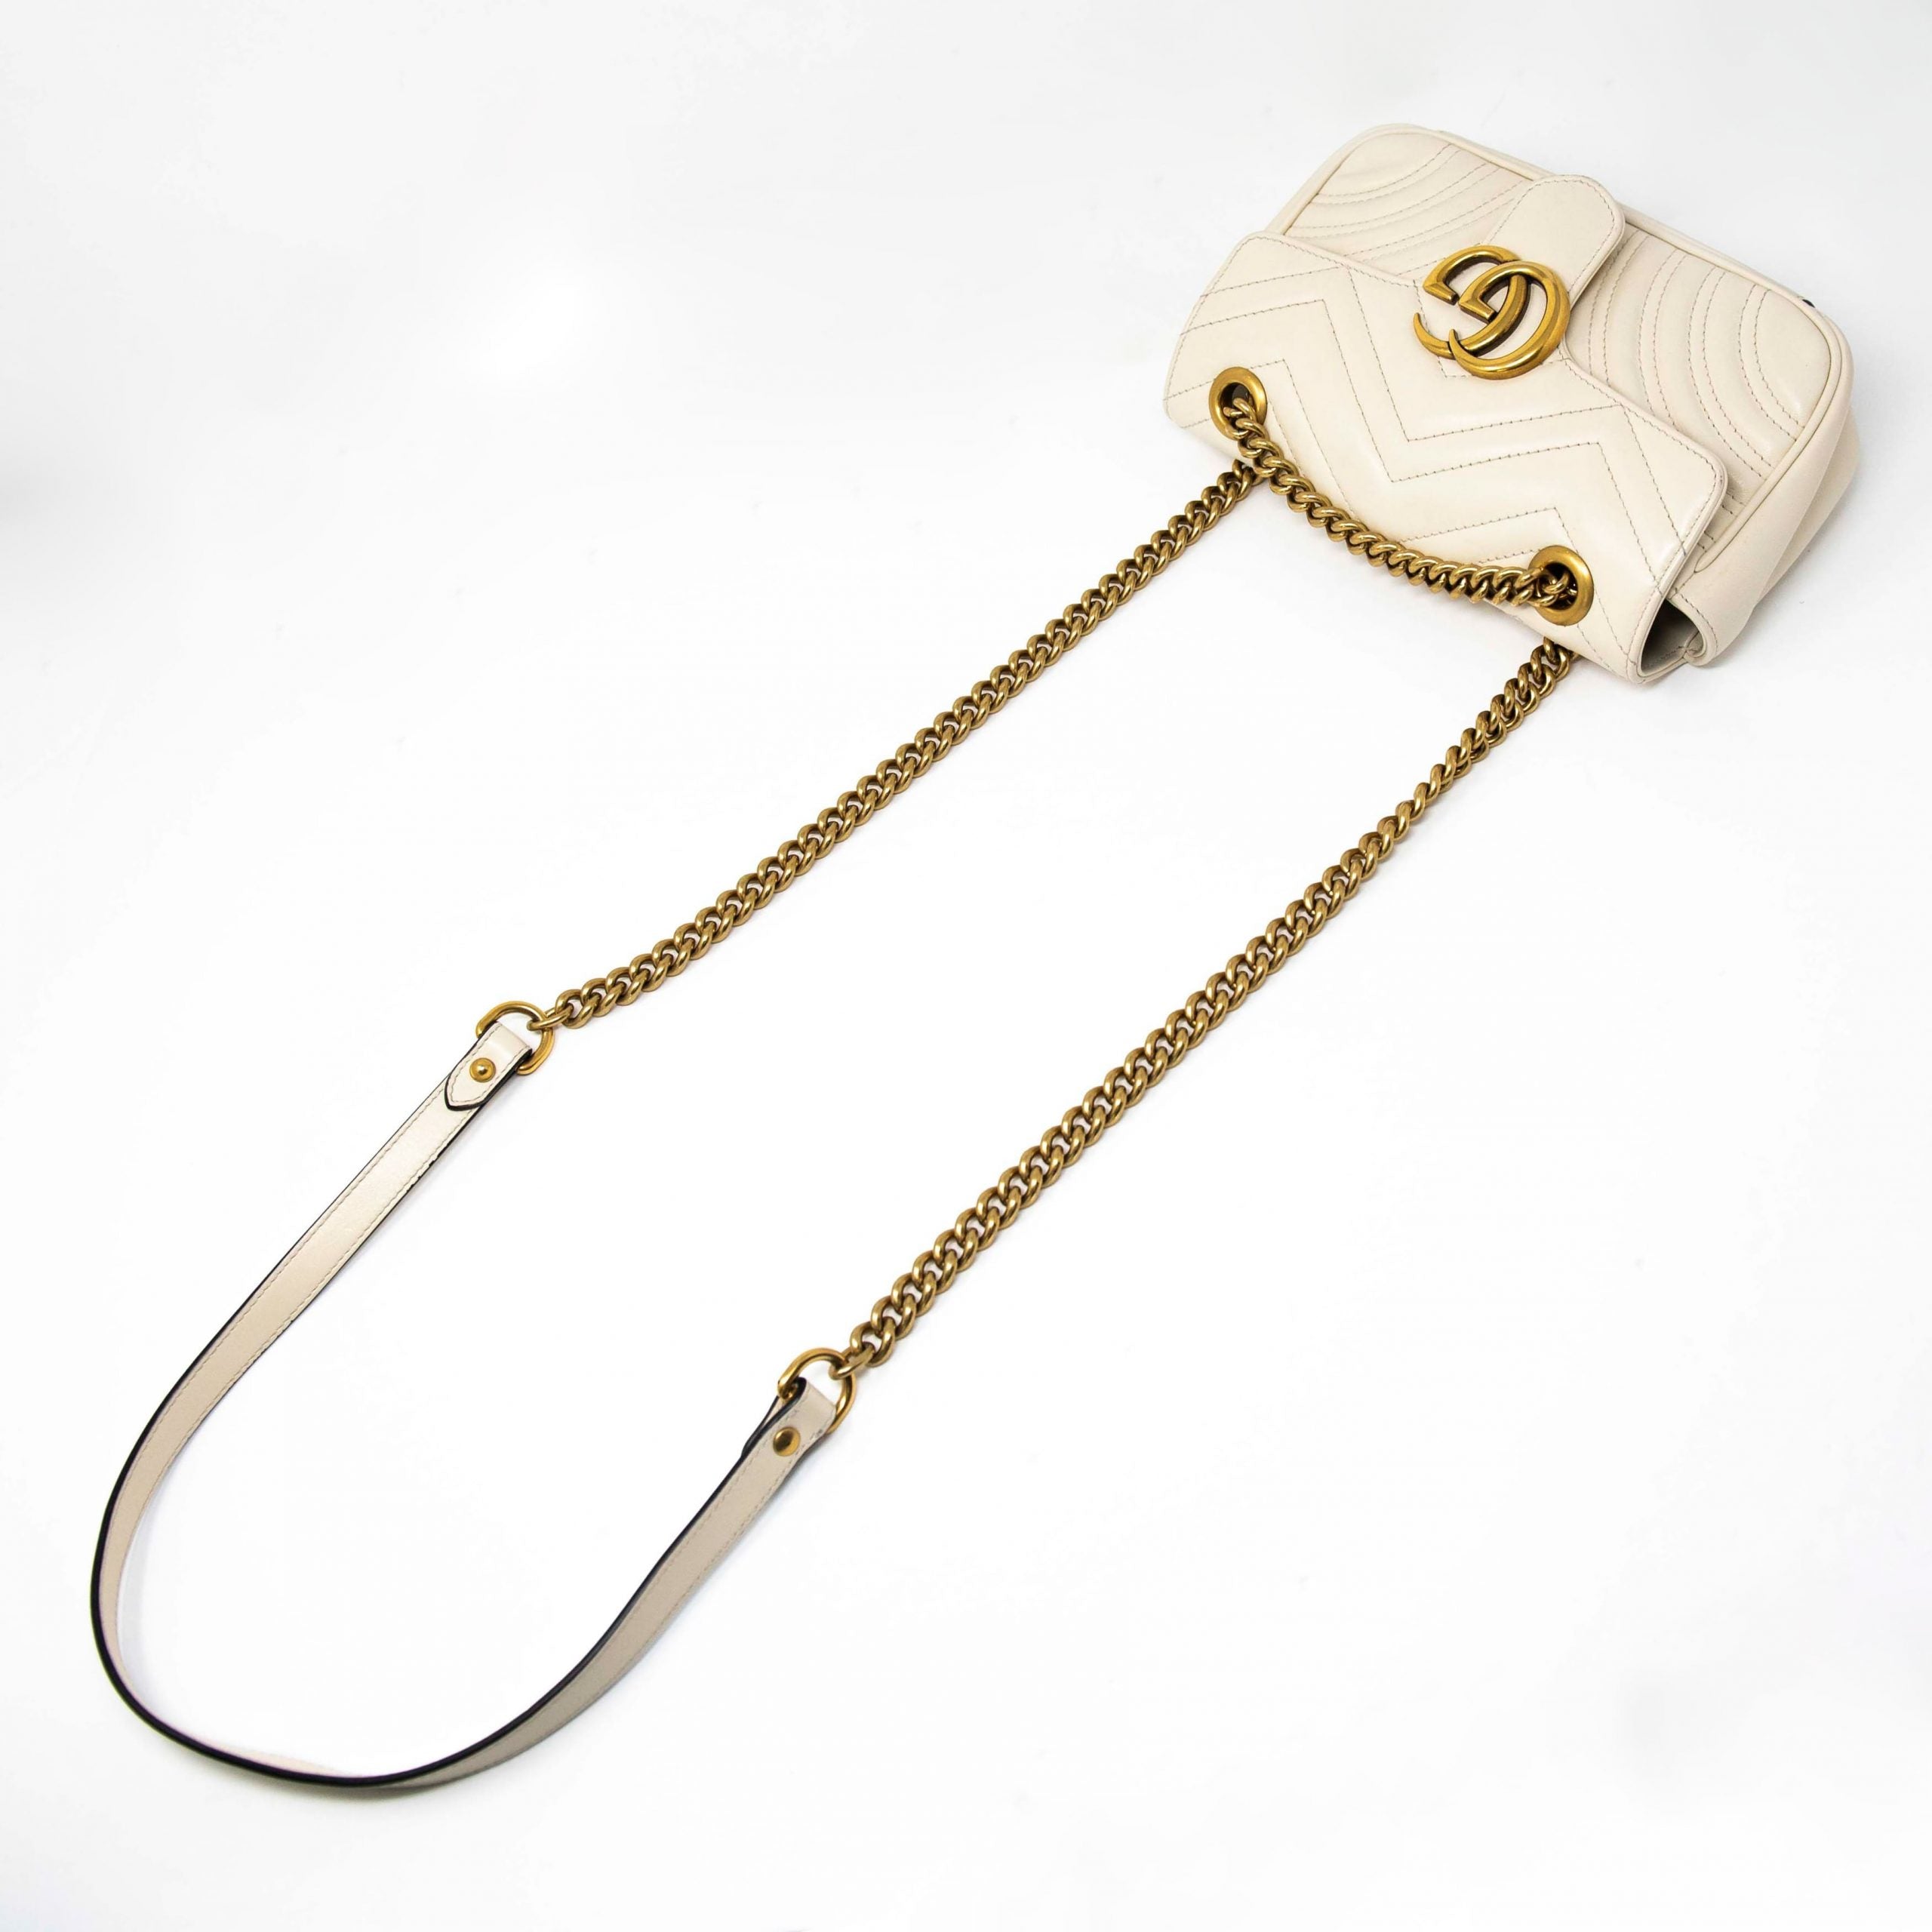 Gucci Ivory Mini GG Marmont Bag